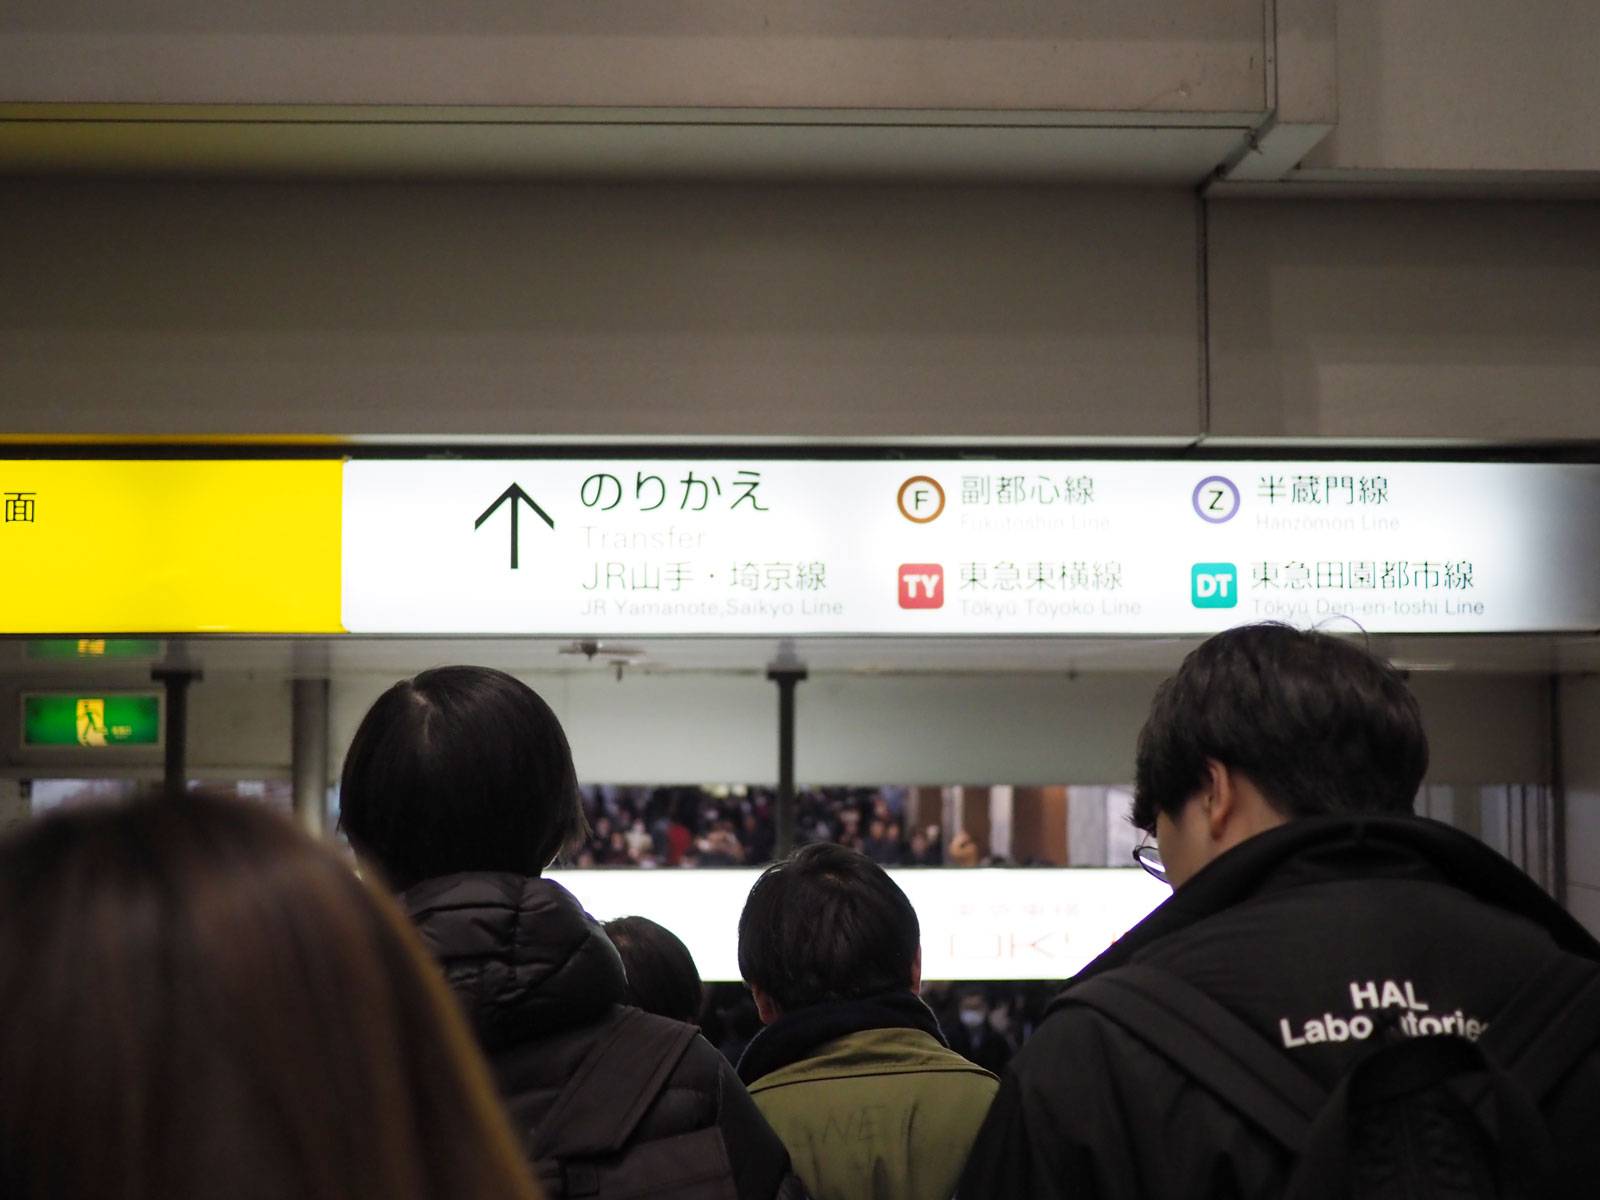 Emerging in the Akihabara station